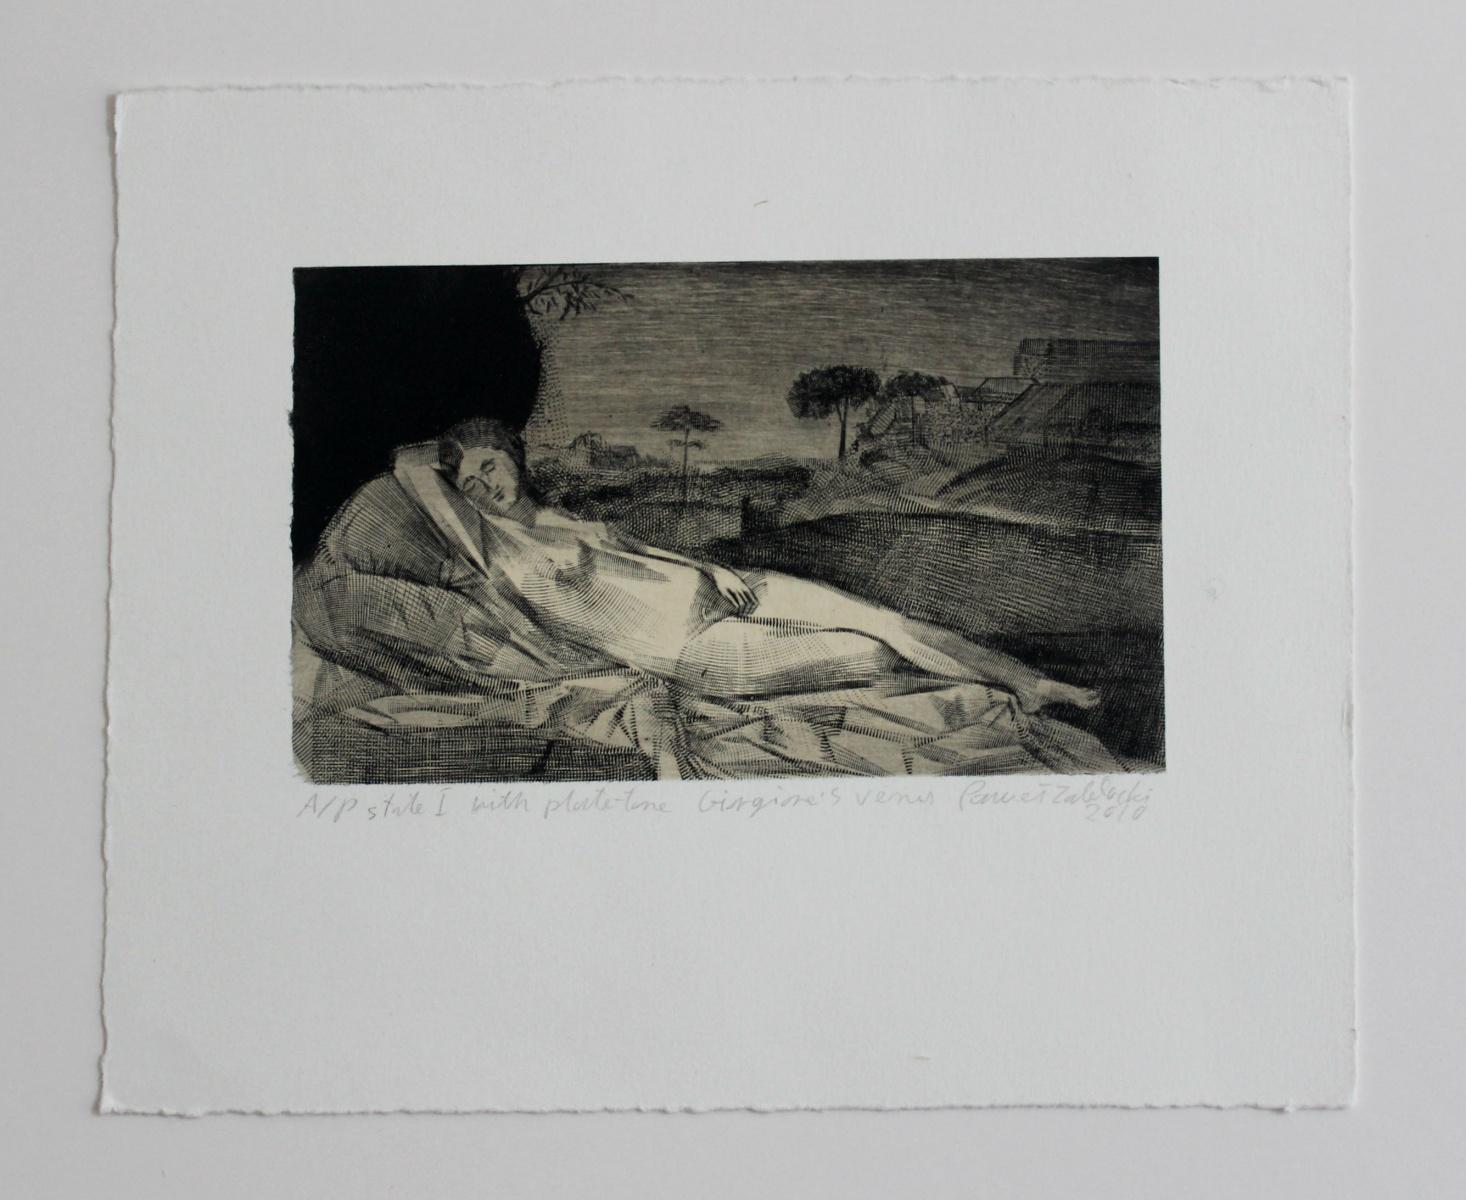 Giorgione's Venus - Contemporary Figurative Etching Print, Nude, Landscape - Black Figurative Print by Pawel Zablocki